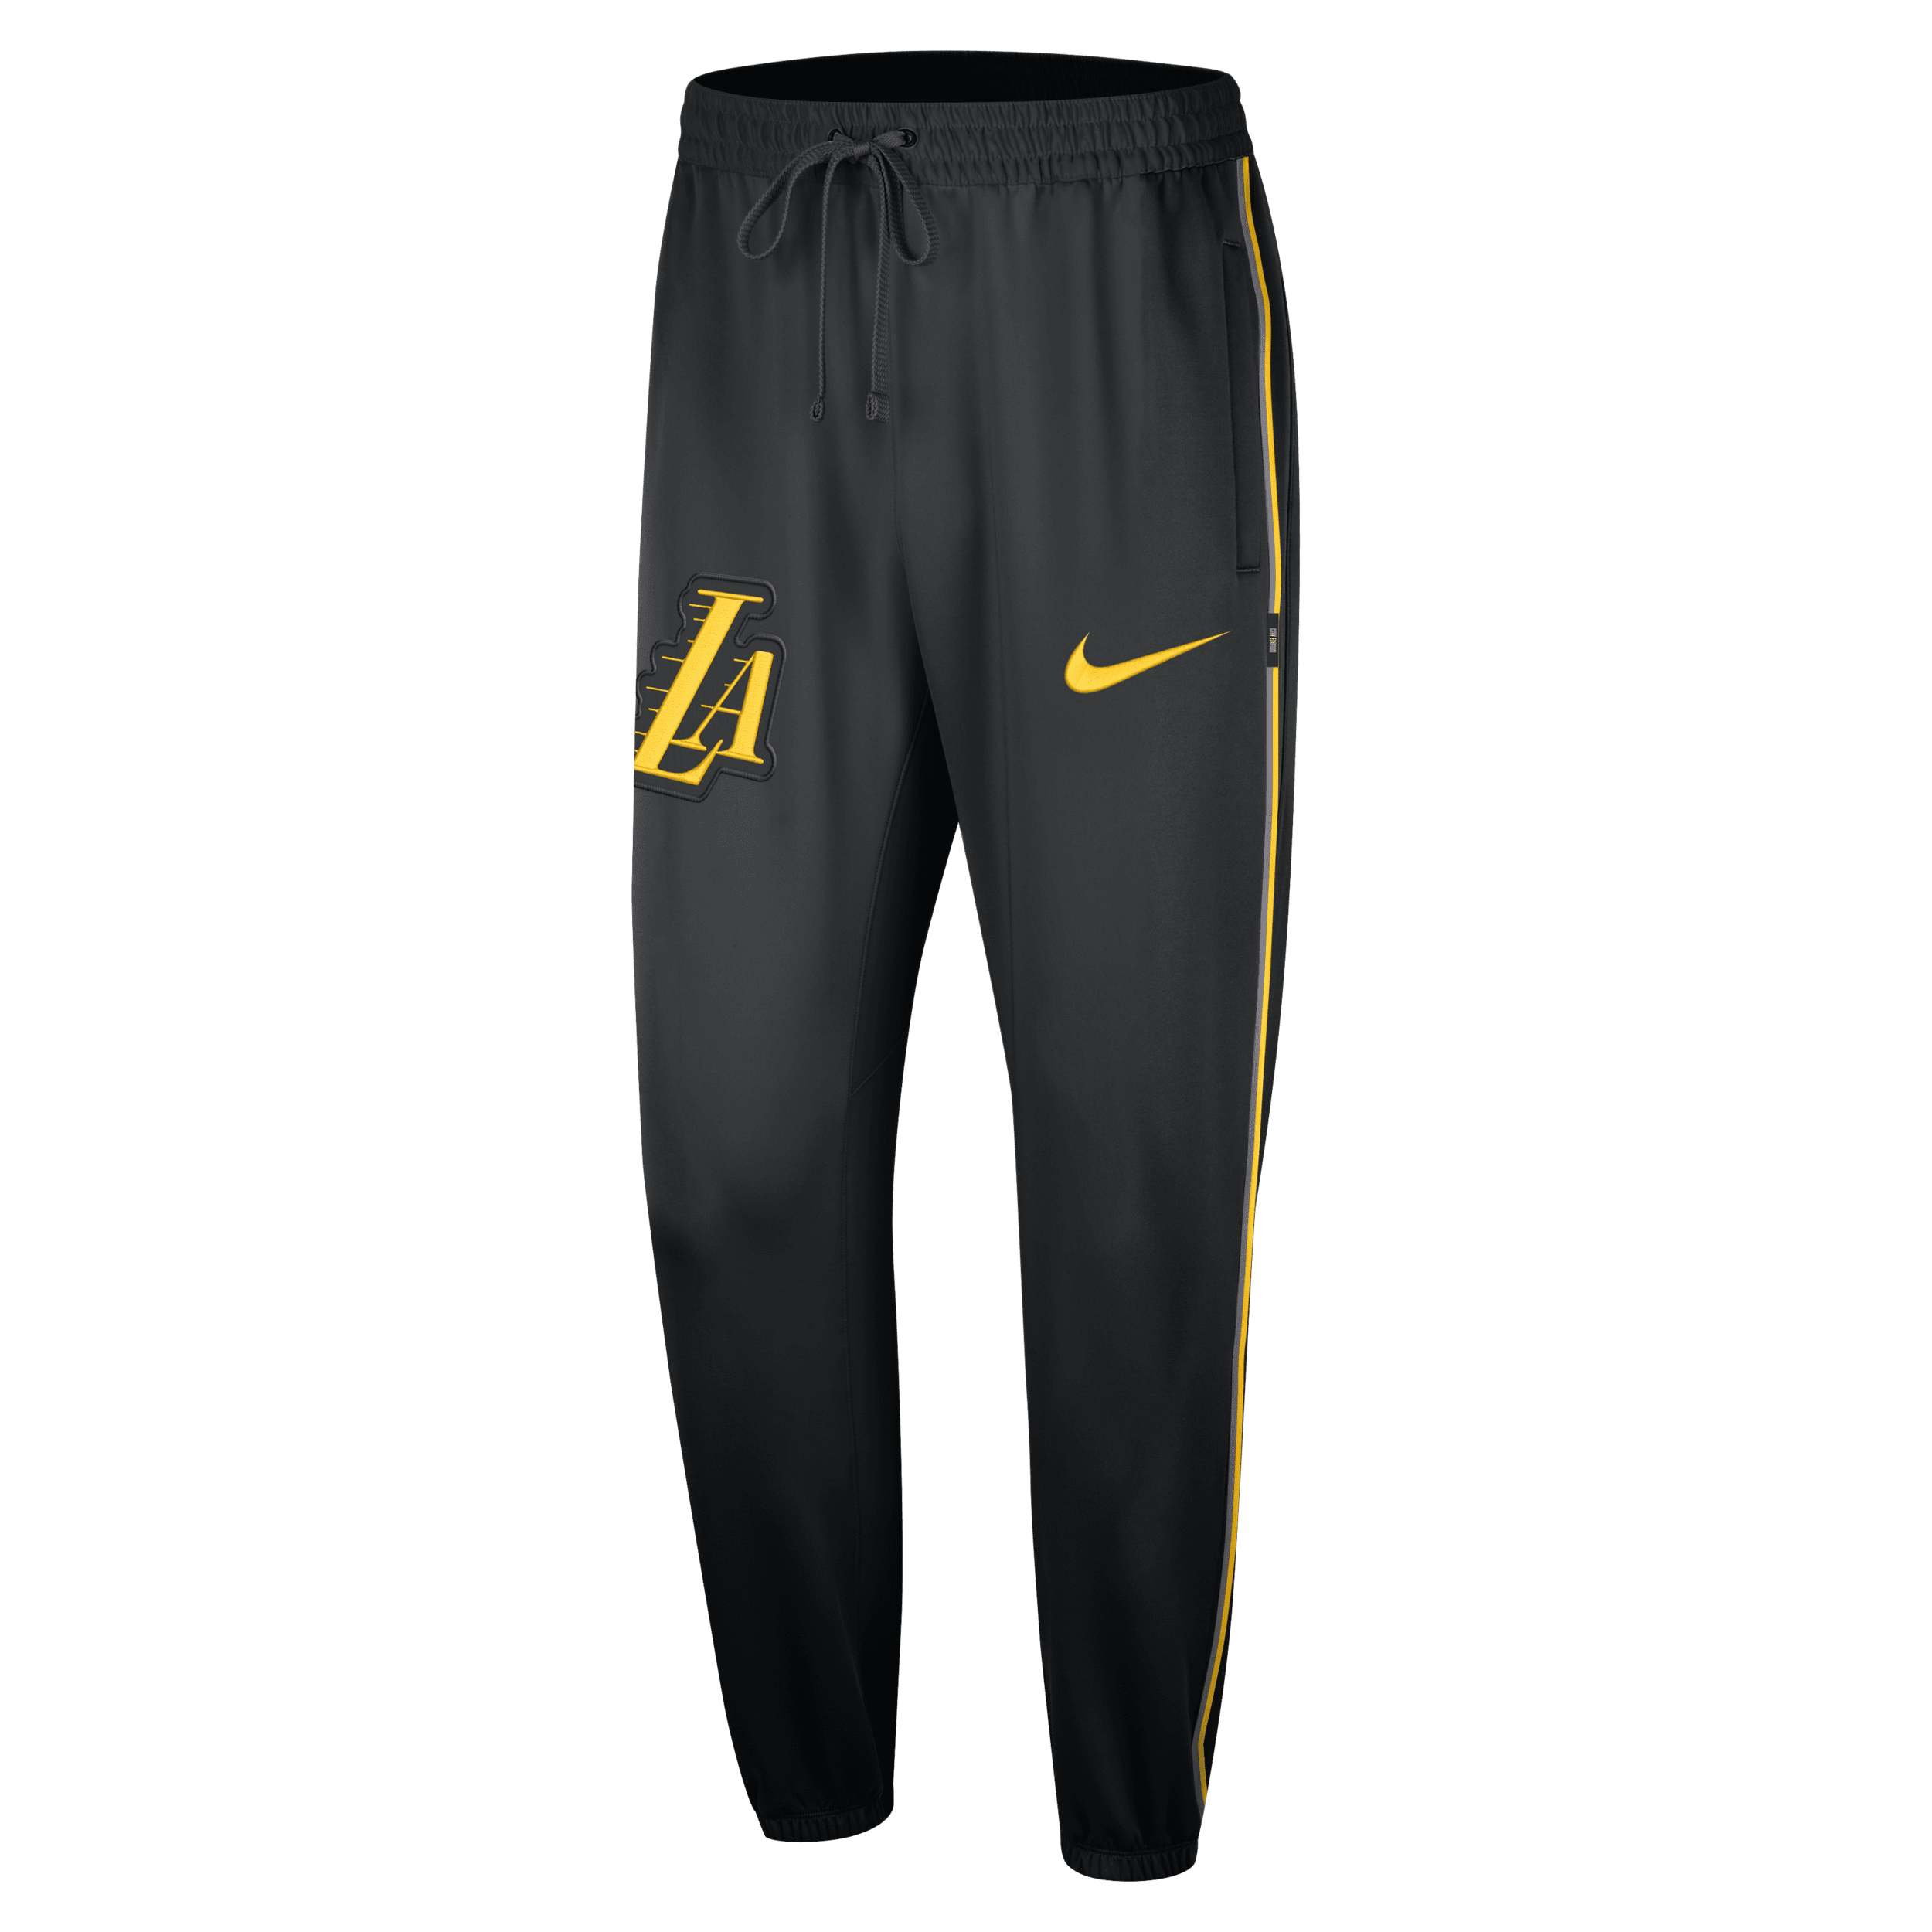 Pantaloni Los Angeles Lakers Showtime City Edition Nike Dri-FIT NBA – Uomo - Nero